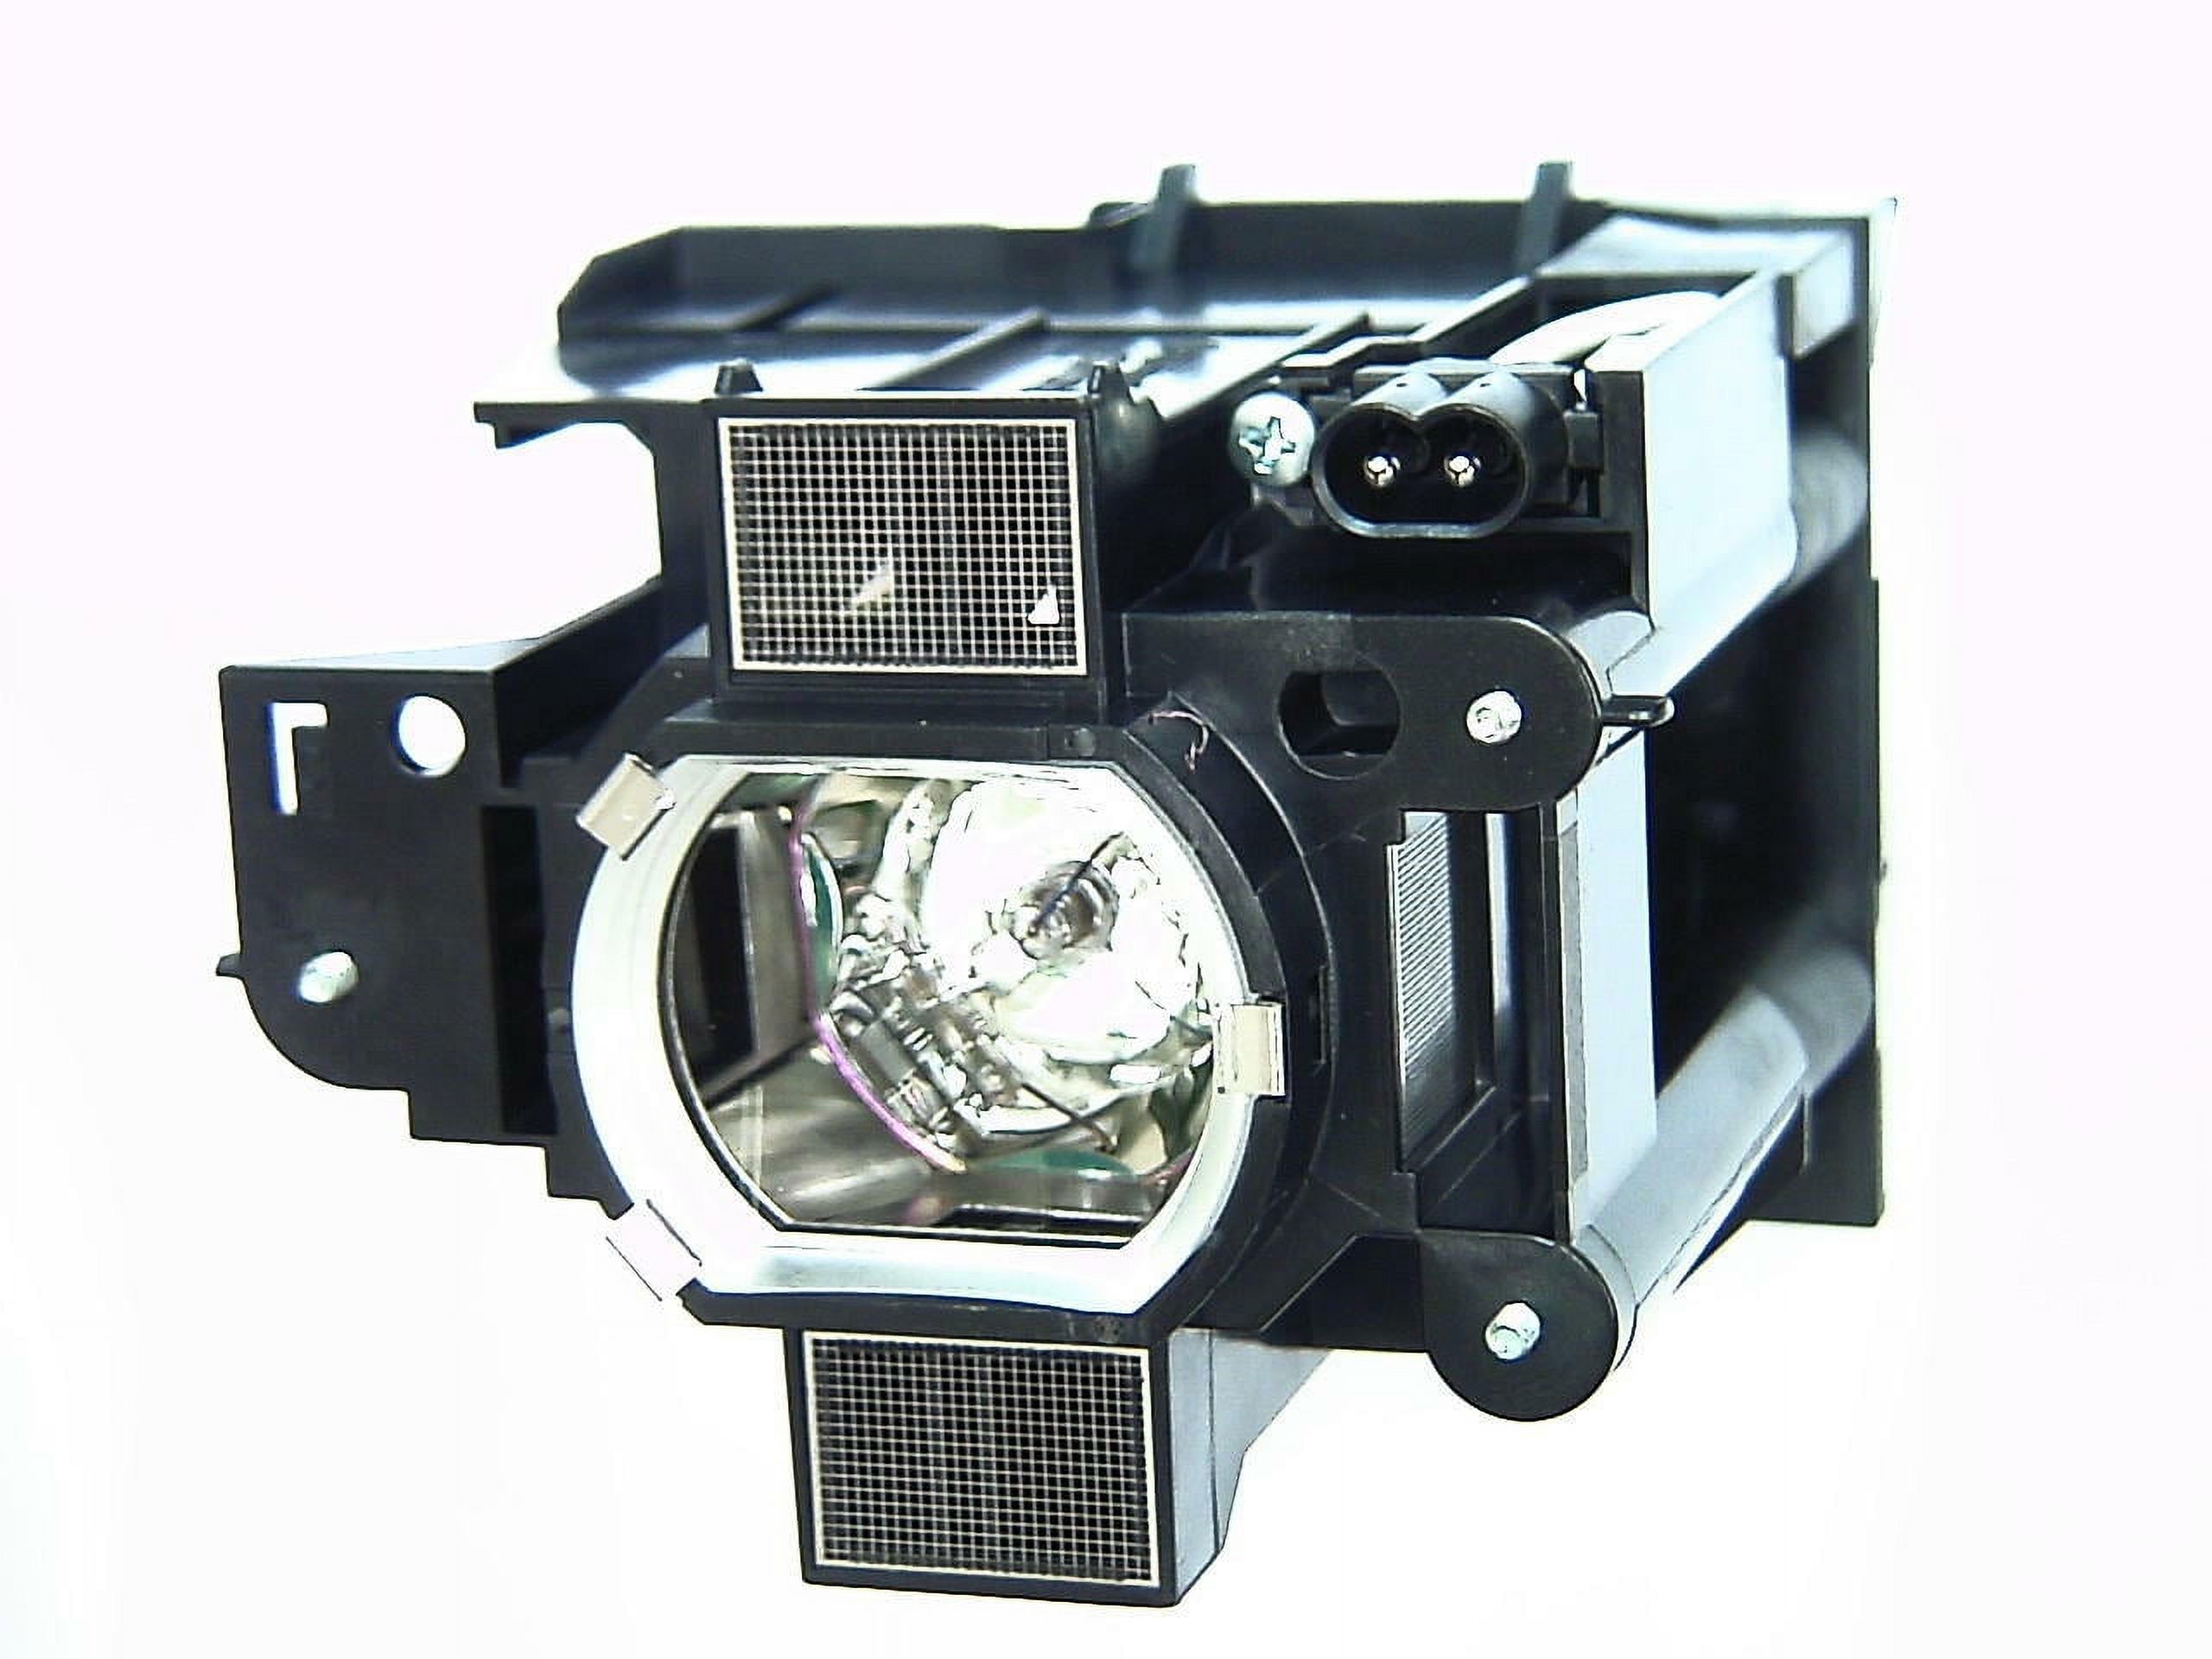 Original Hitachi DT01471 Projector Lamp - image 1 of 2